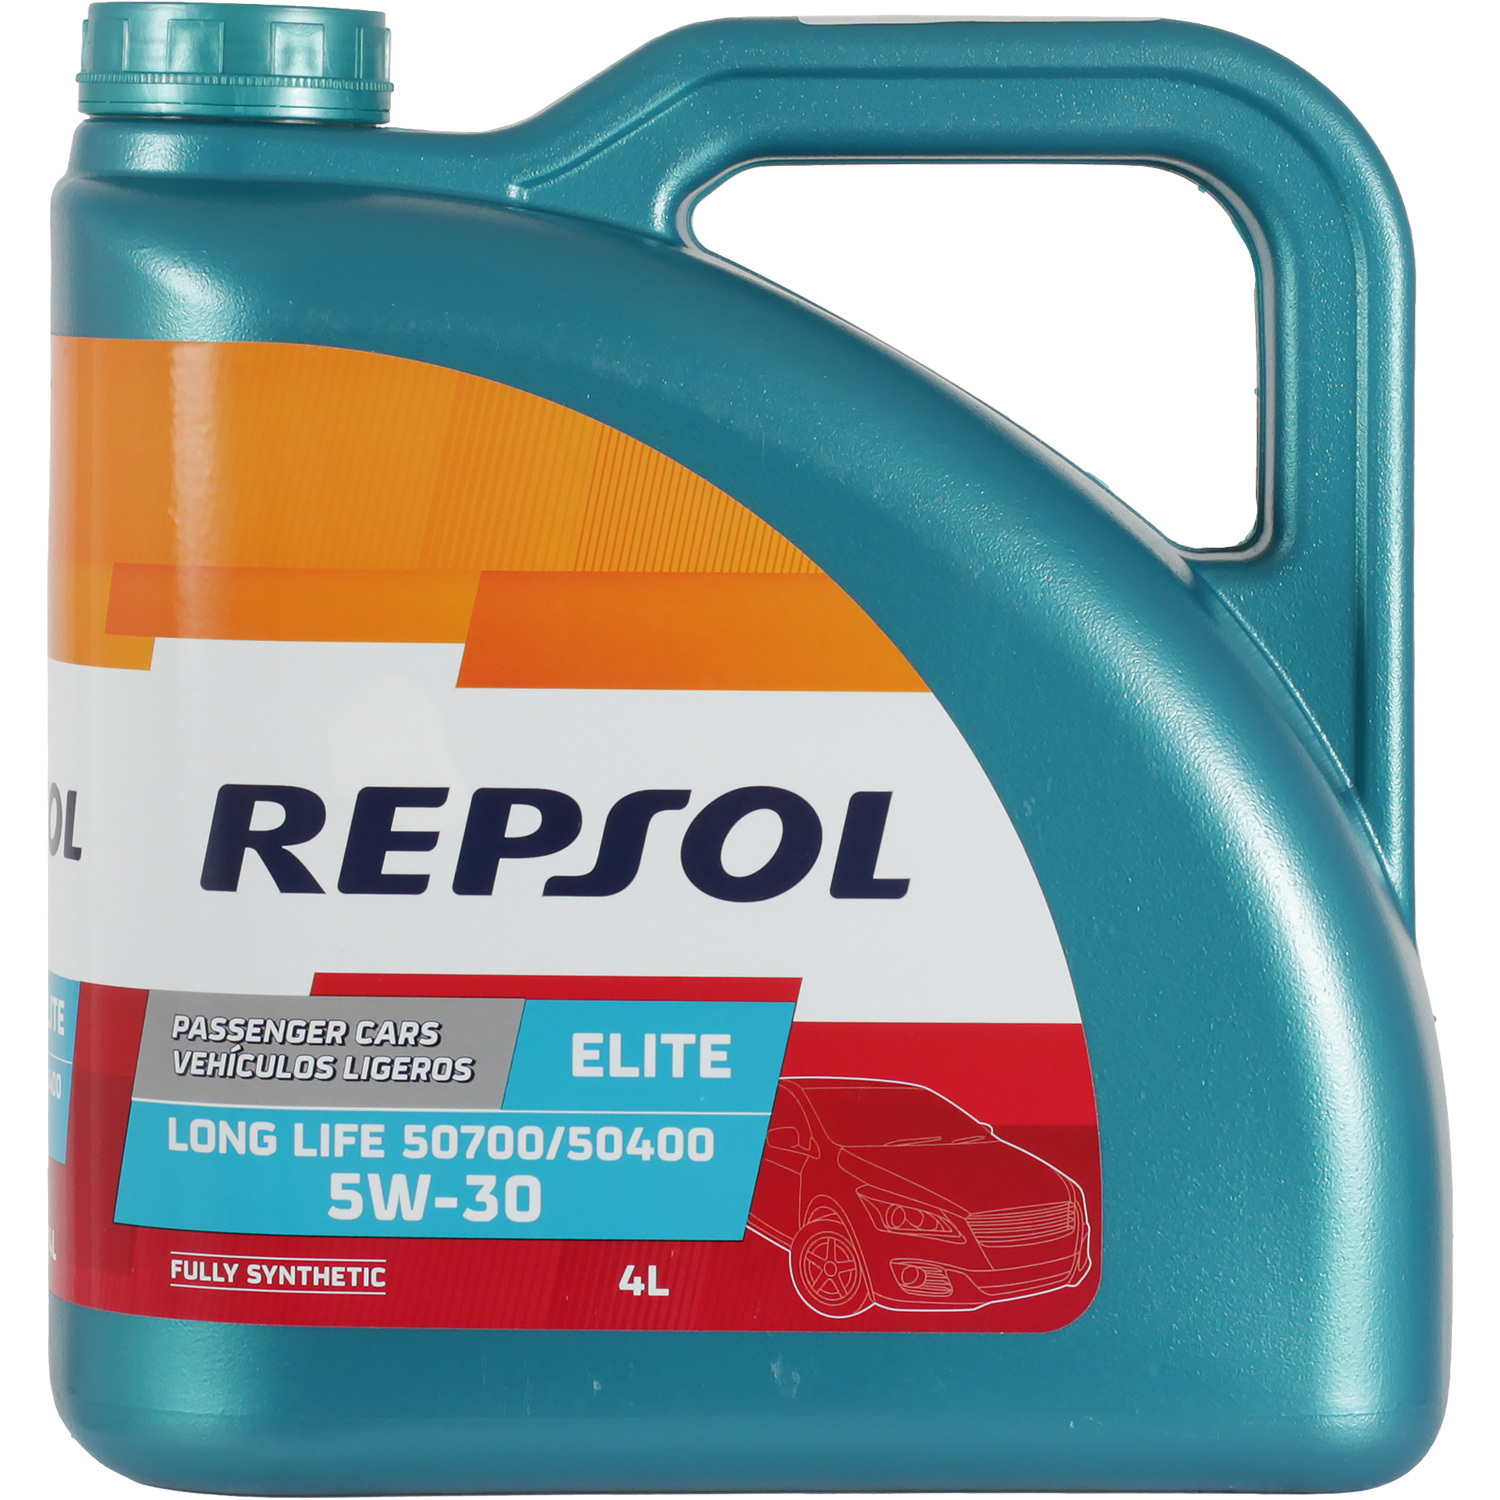 Repsol Масло моторное Repsol ELITE LONG LIFE 50700/50400 5W-30 4л repsol масло моторное repsol elite long life 50700 50400 5w 30 4л